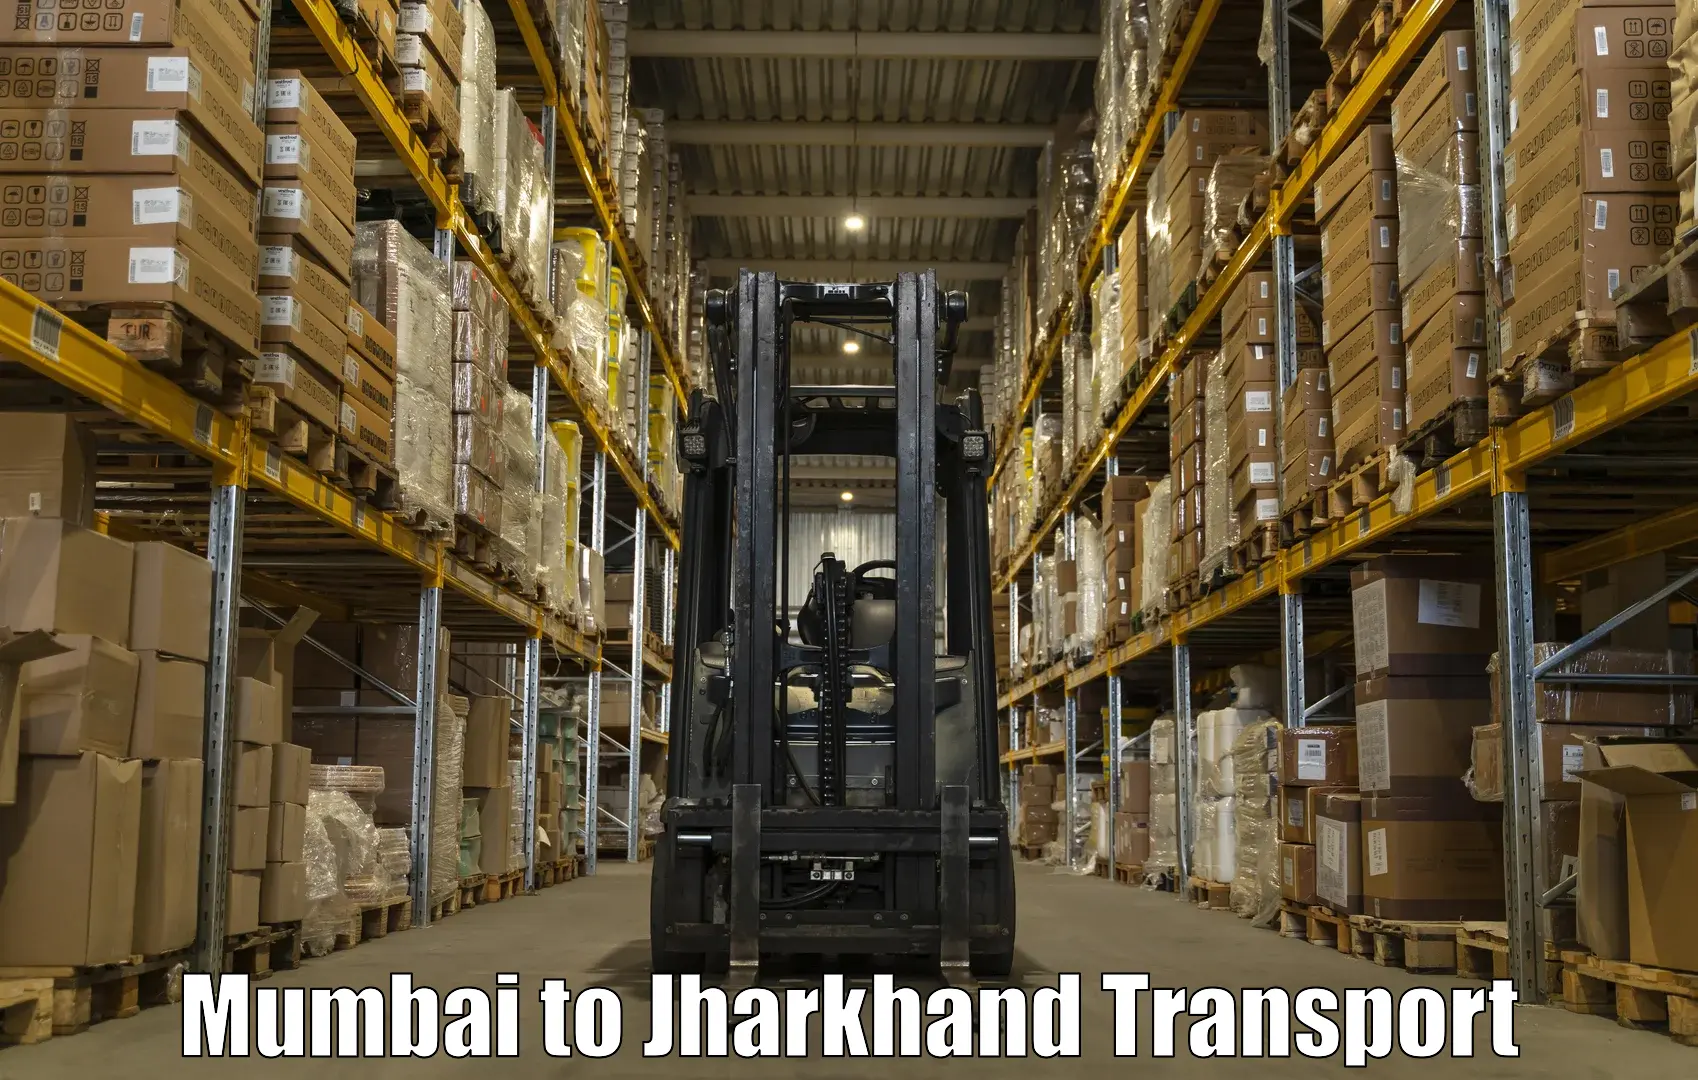 Truck transport companies in India Mumbai to Chandil